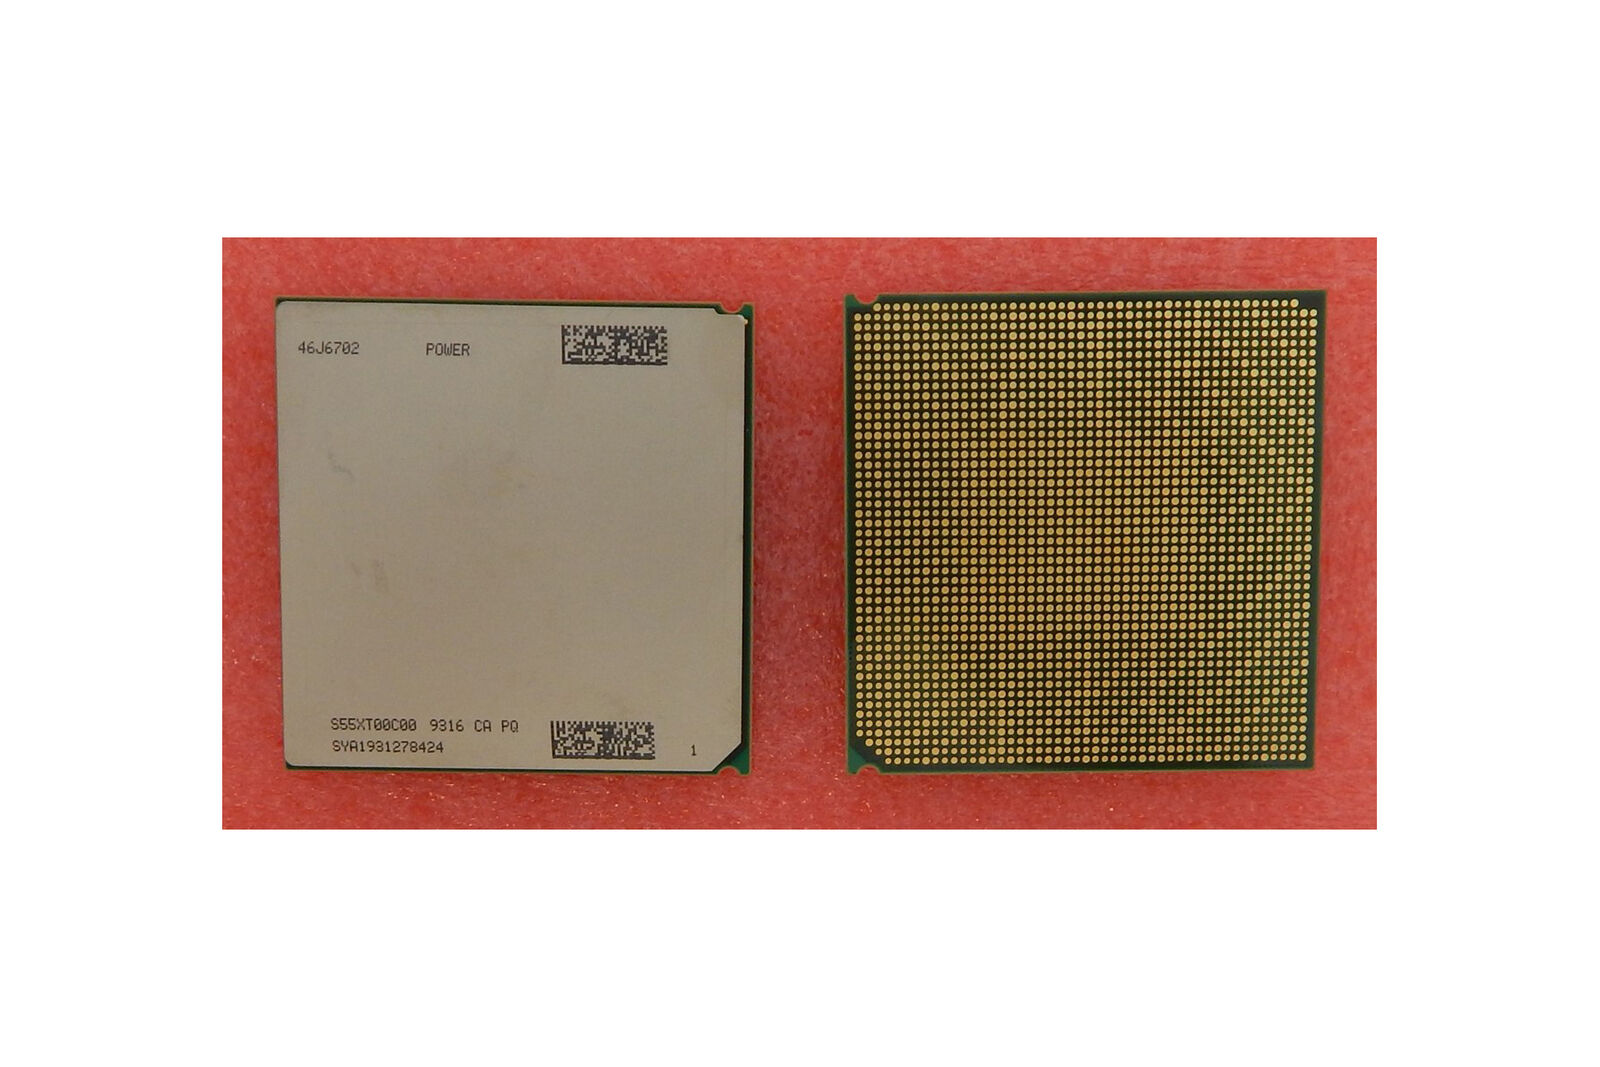 IBM 3.0GHz 4-Core Power 7 8202-E4B CPU 46J6702